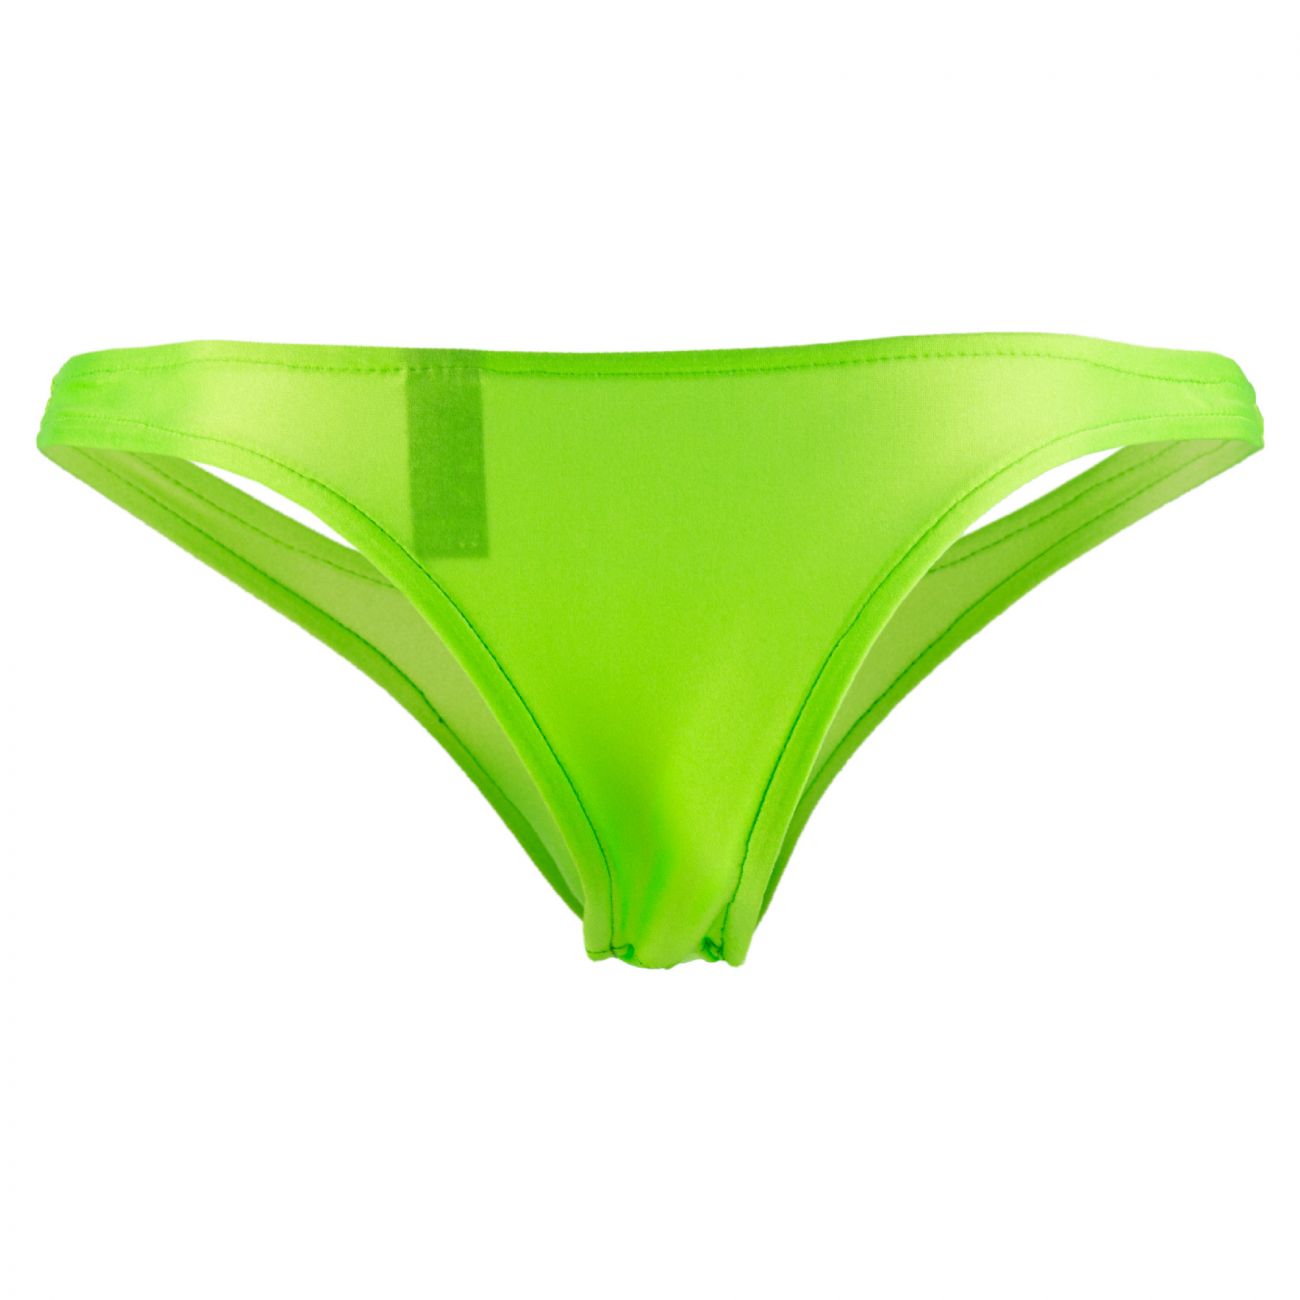 Underwear: Male Power PAK874 Euro Male Spandex Full Cut Thong | eBay